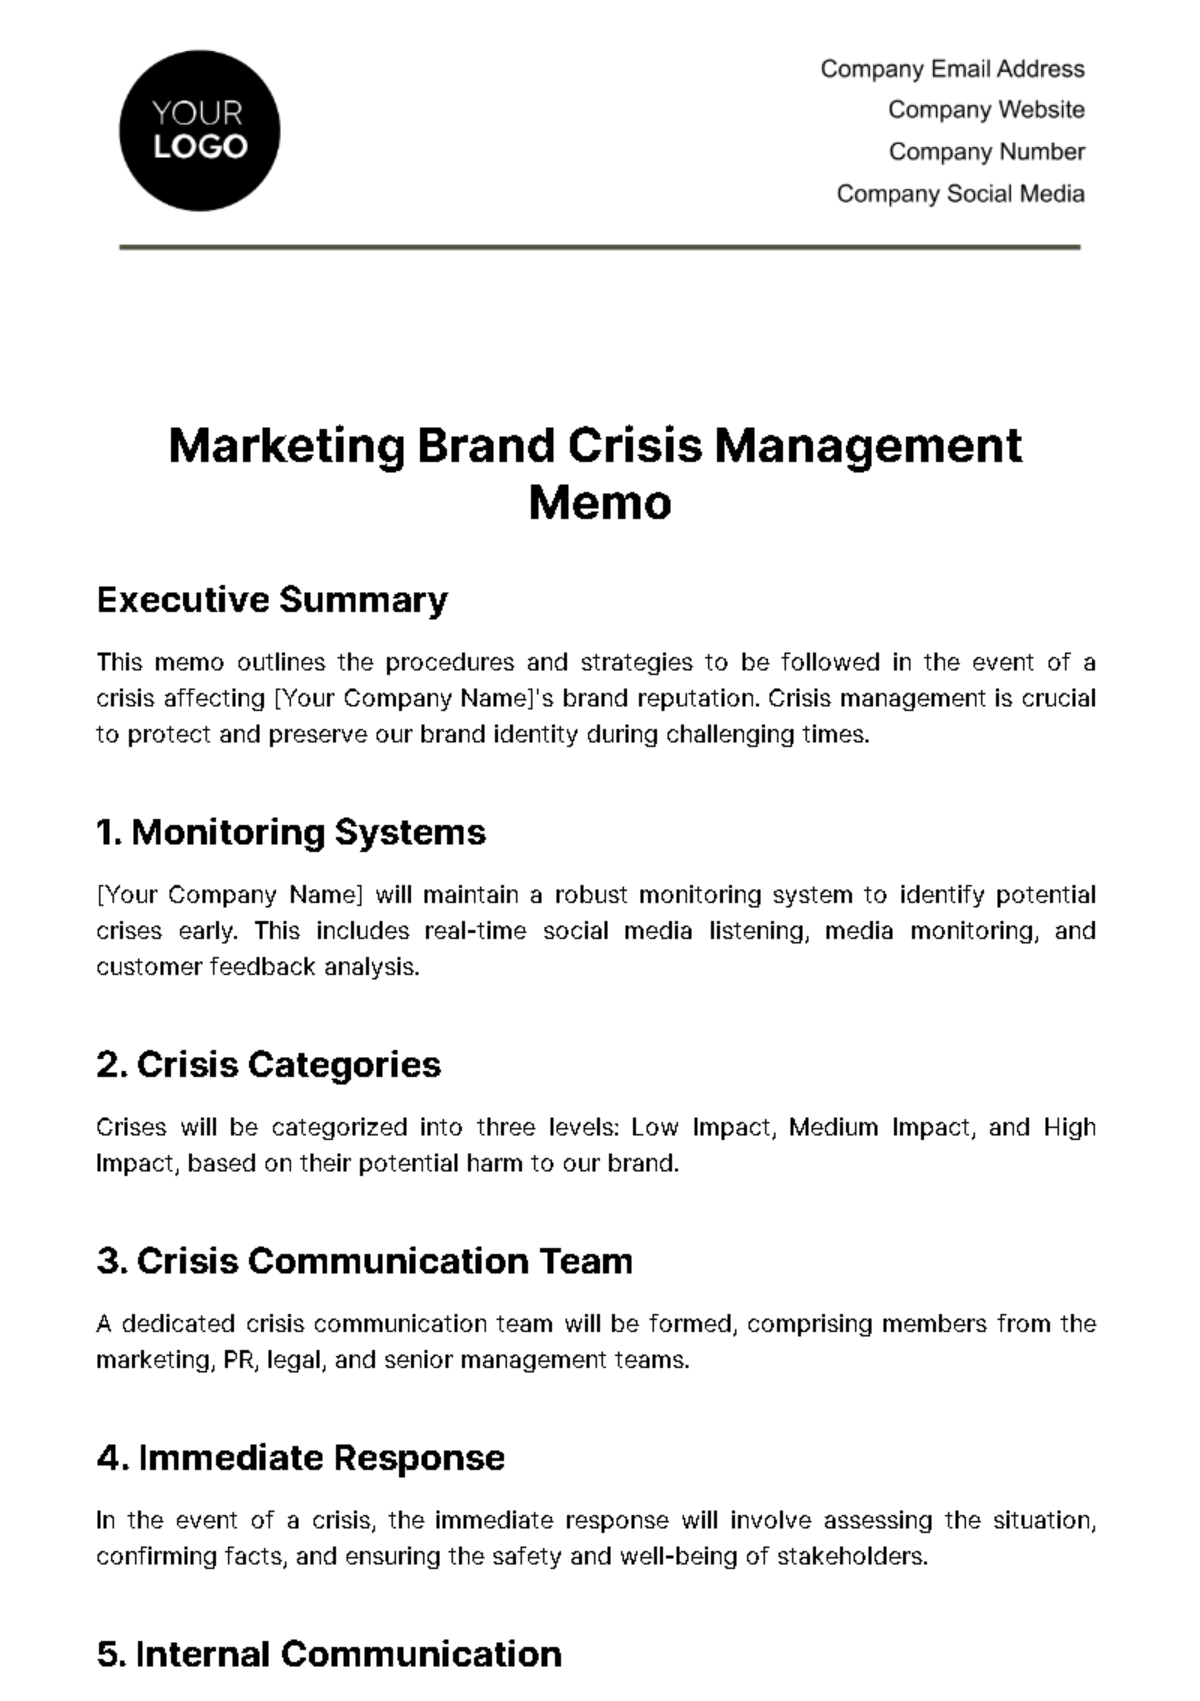 Marketing Brand Crisis Management Memo Template